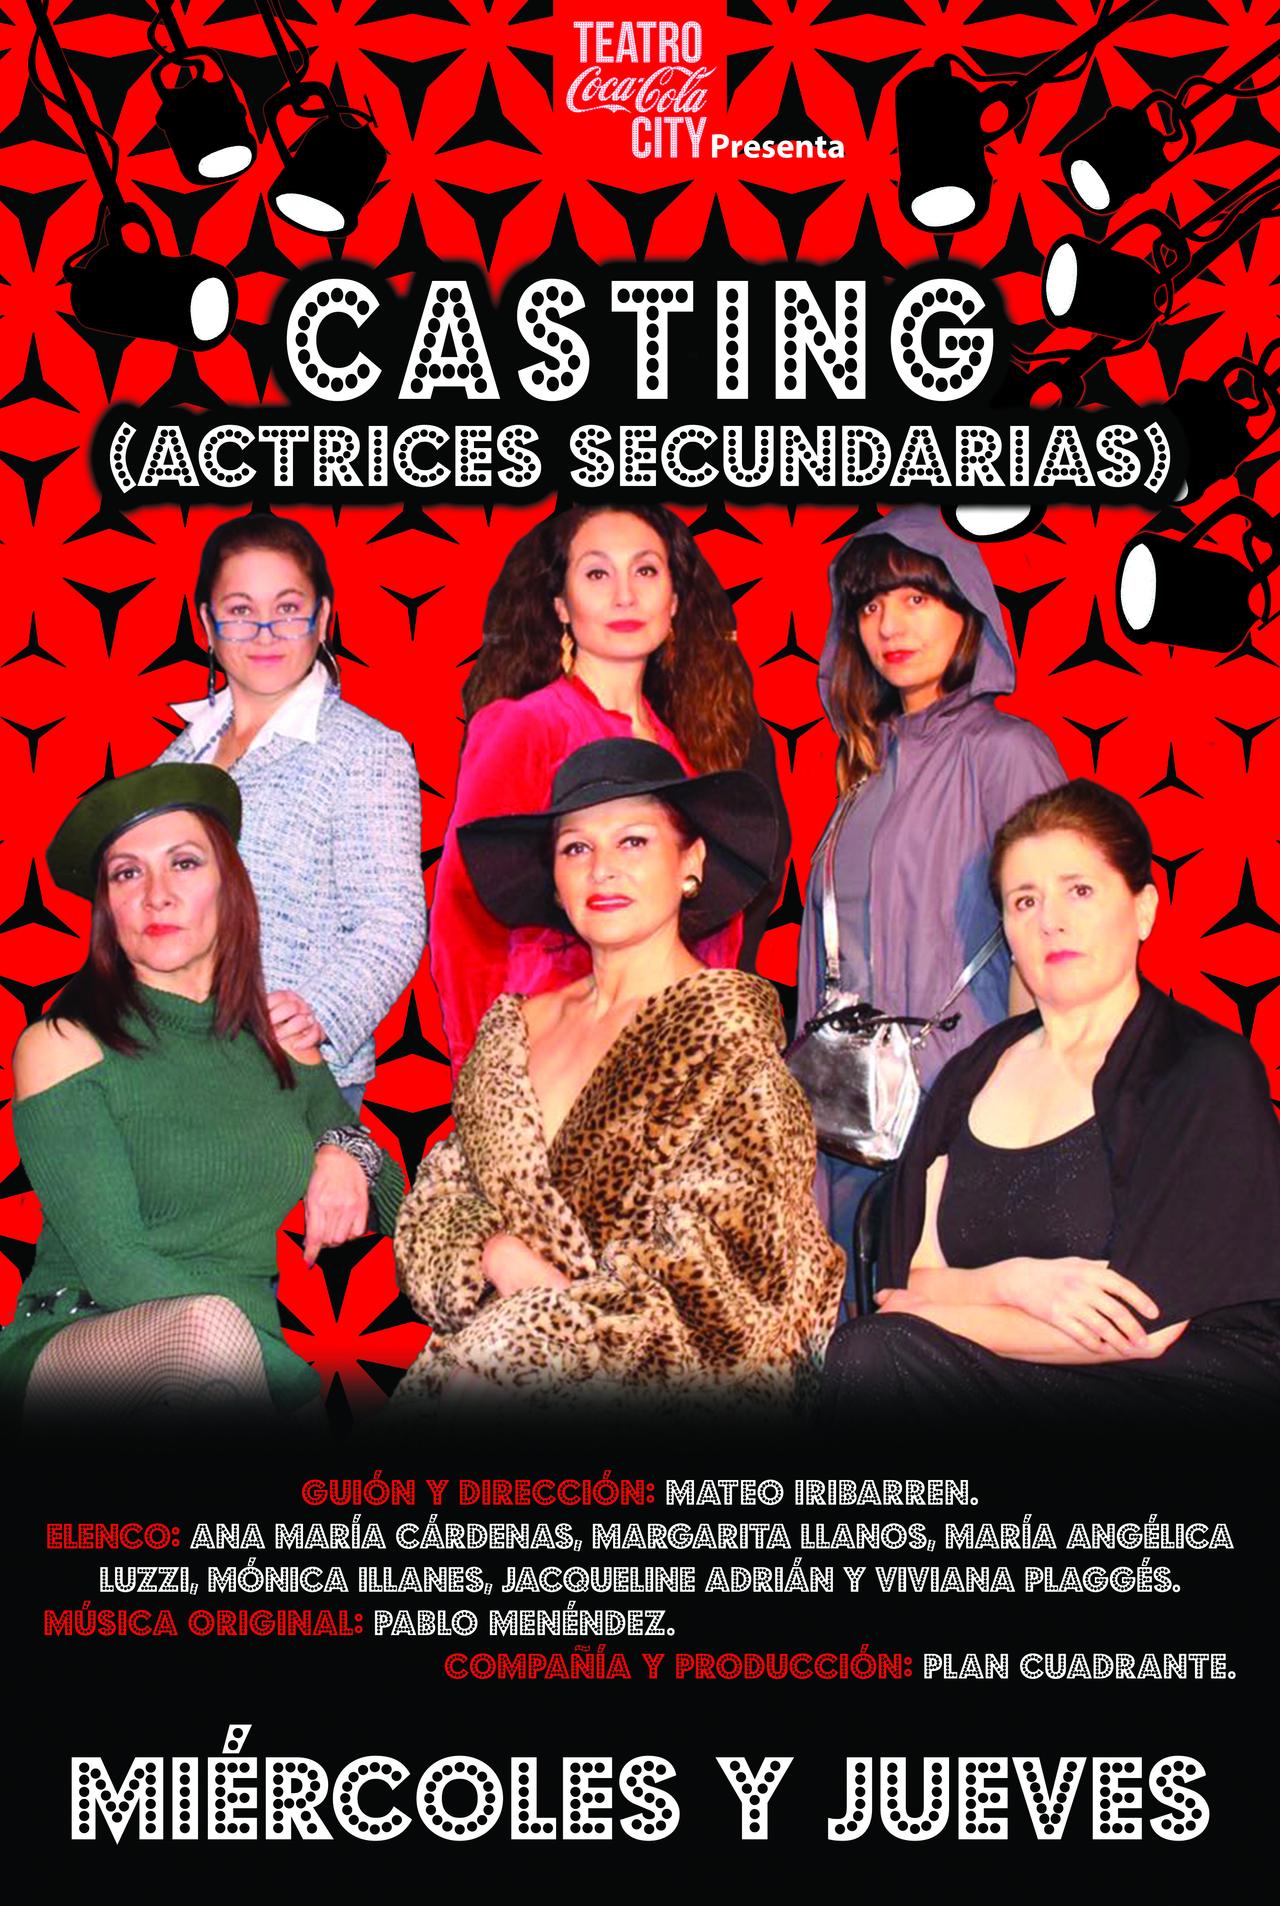 Casting (actrices secundarias)